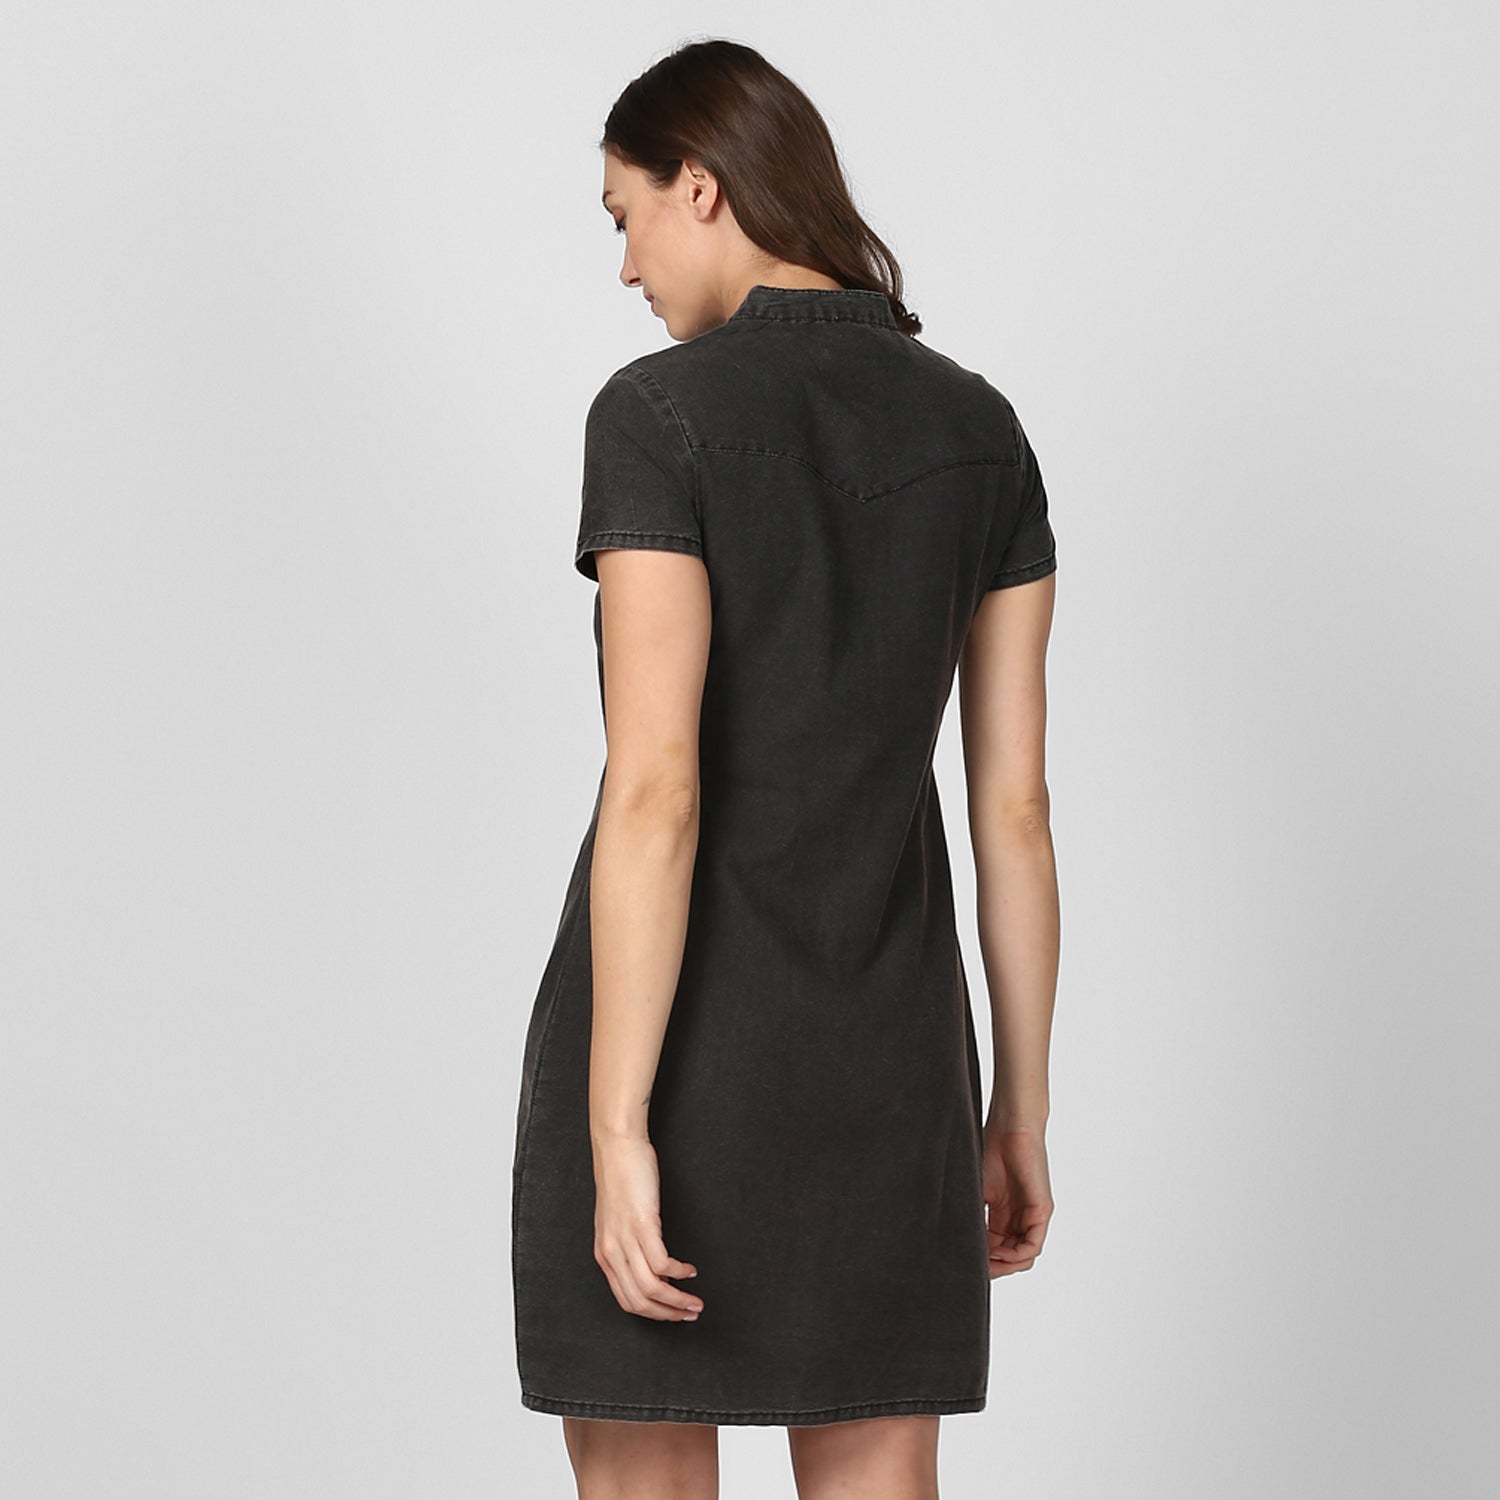 Women's Black Denim Dress with White Drawstring - StyleStone